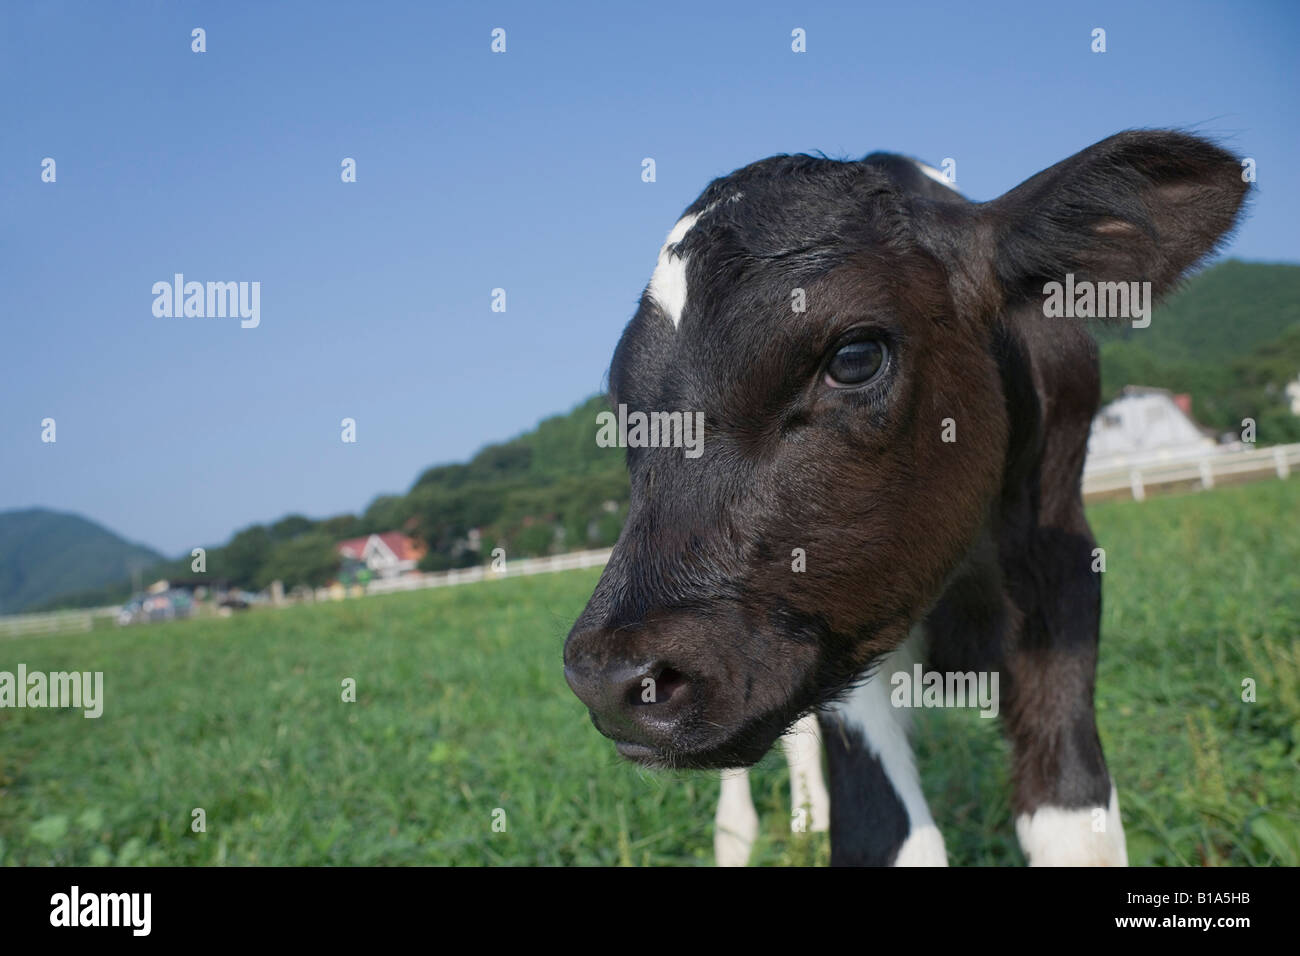 One calf standing Stock Photo